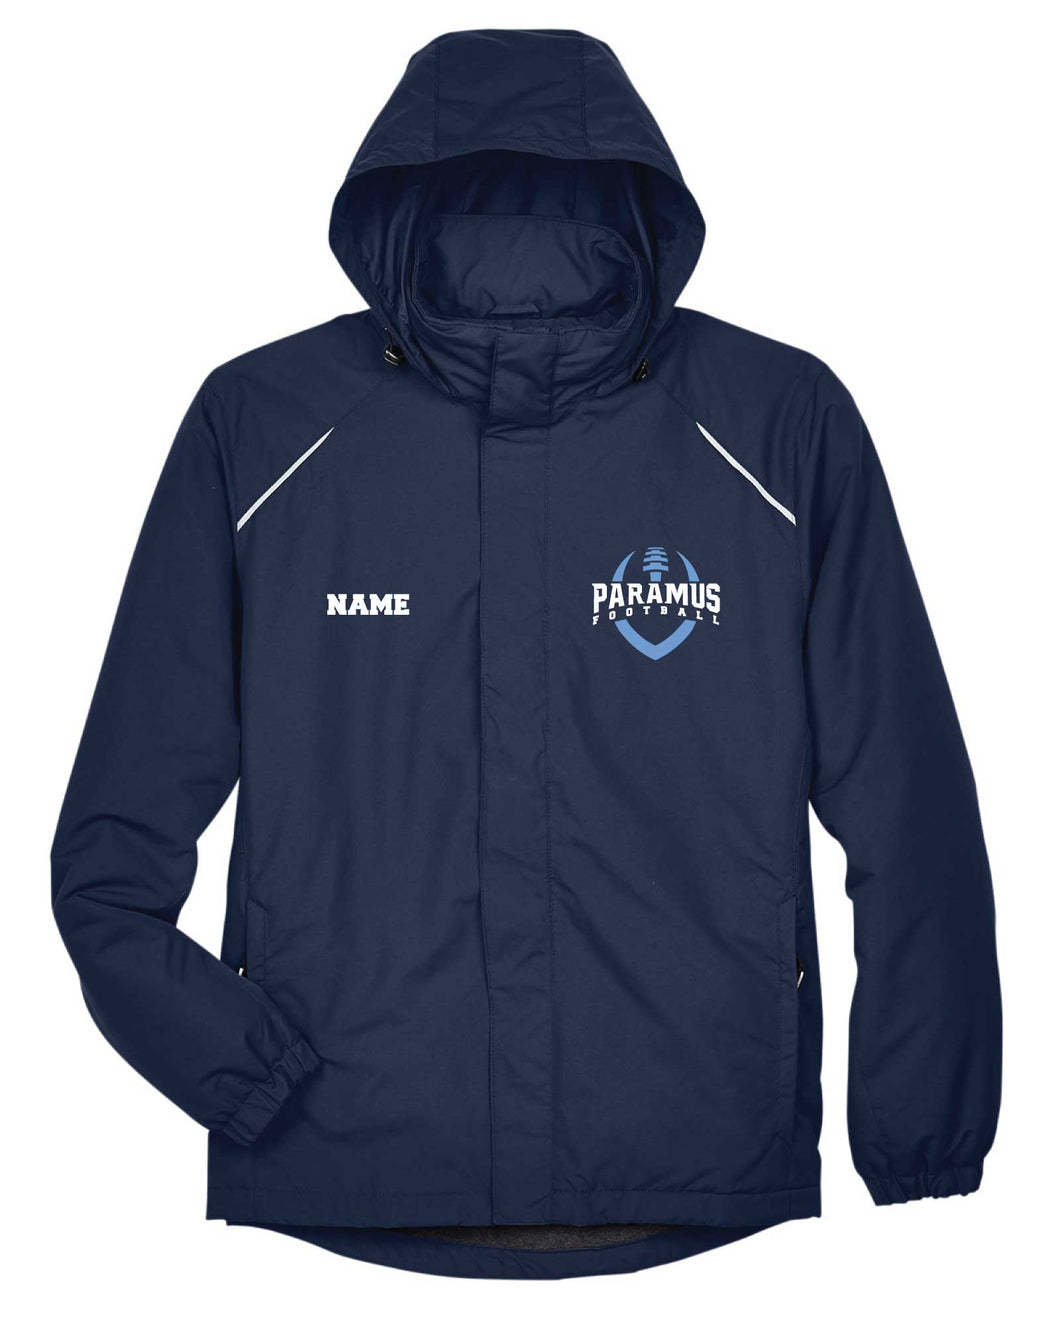 Paramus Football Men's Hooded Rain Jacket - Navy - 5KounT